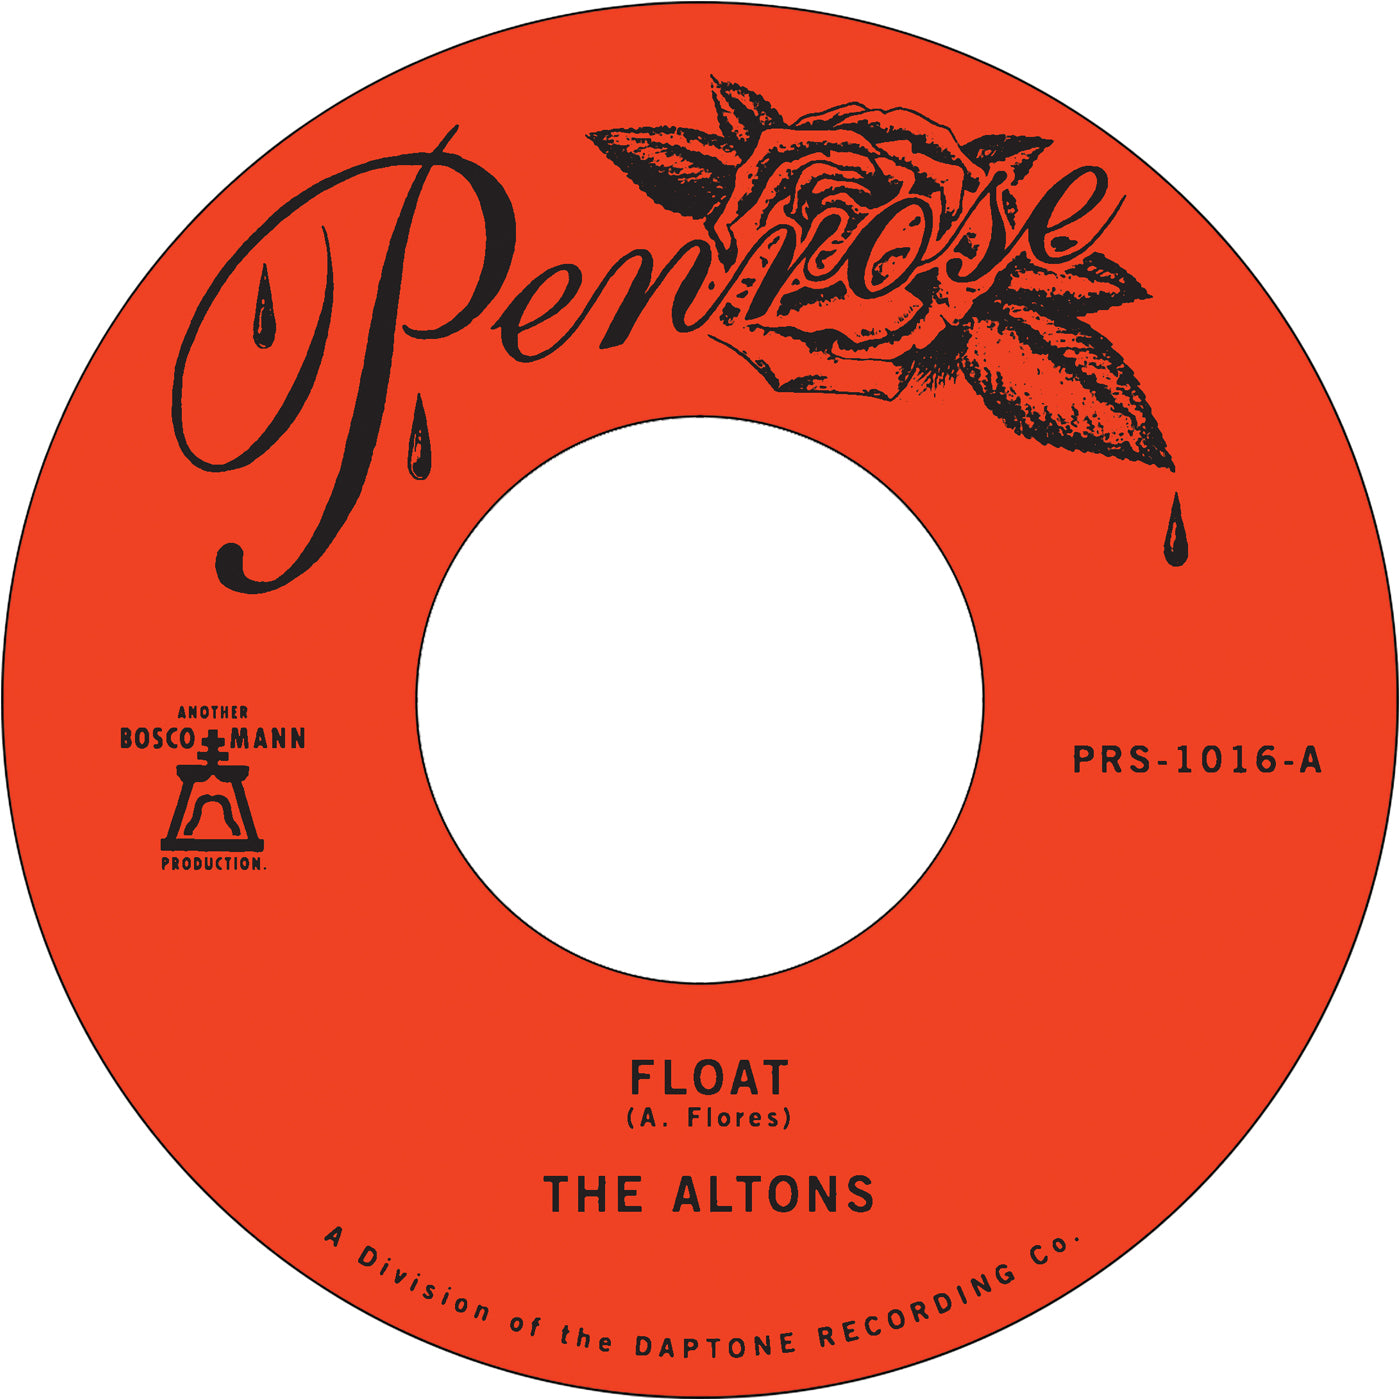 The Altons "Float" 45